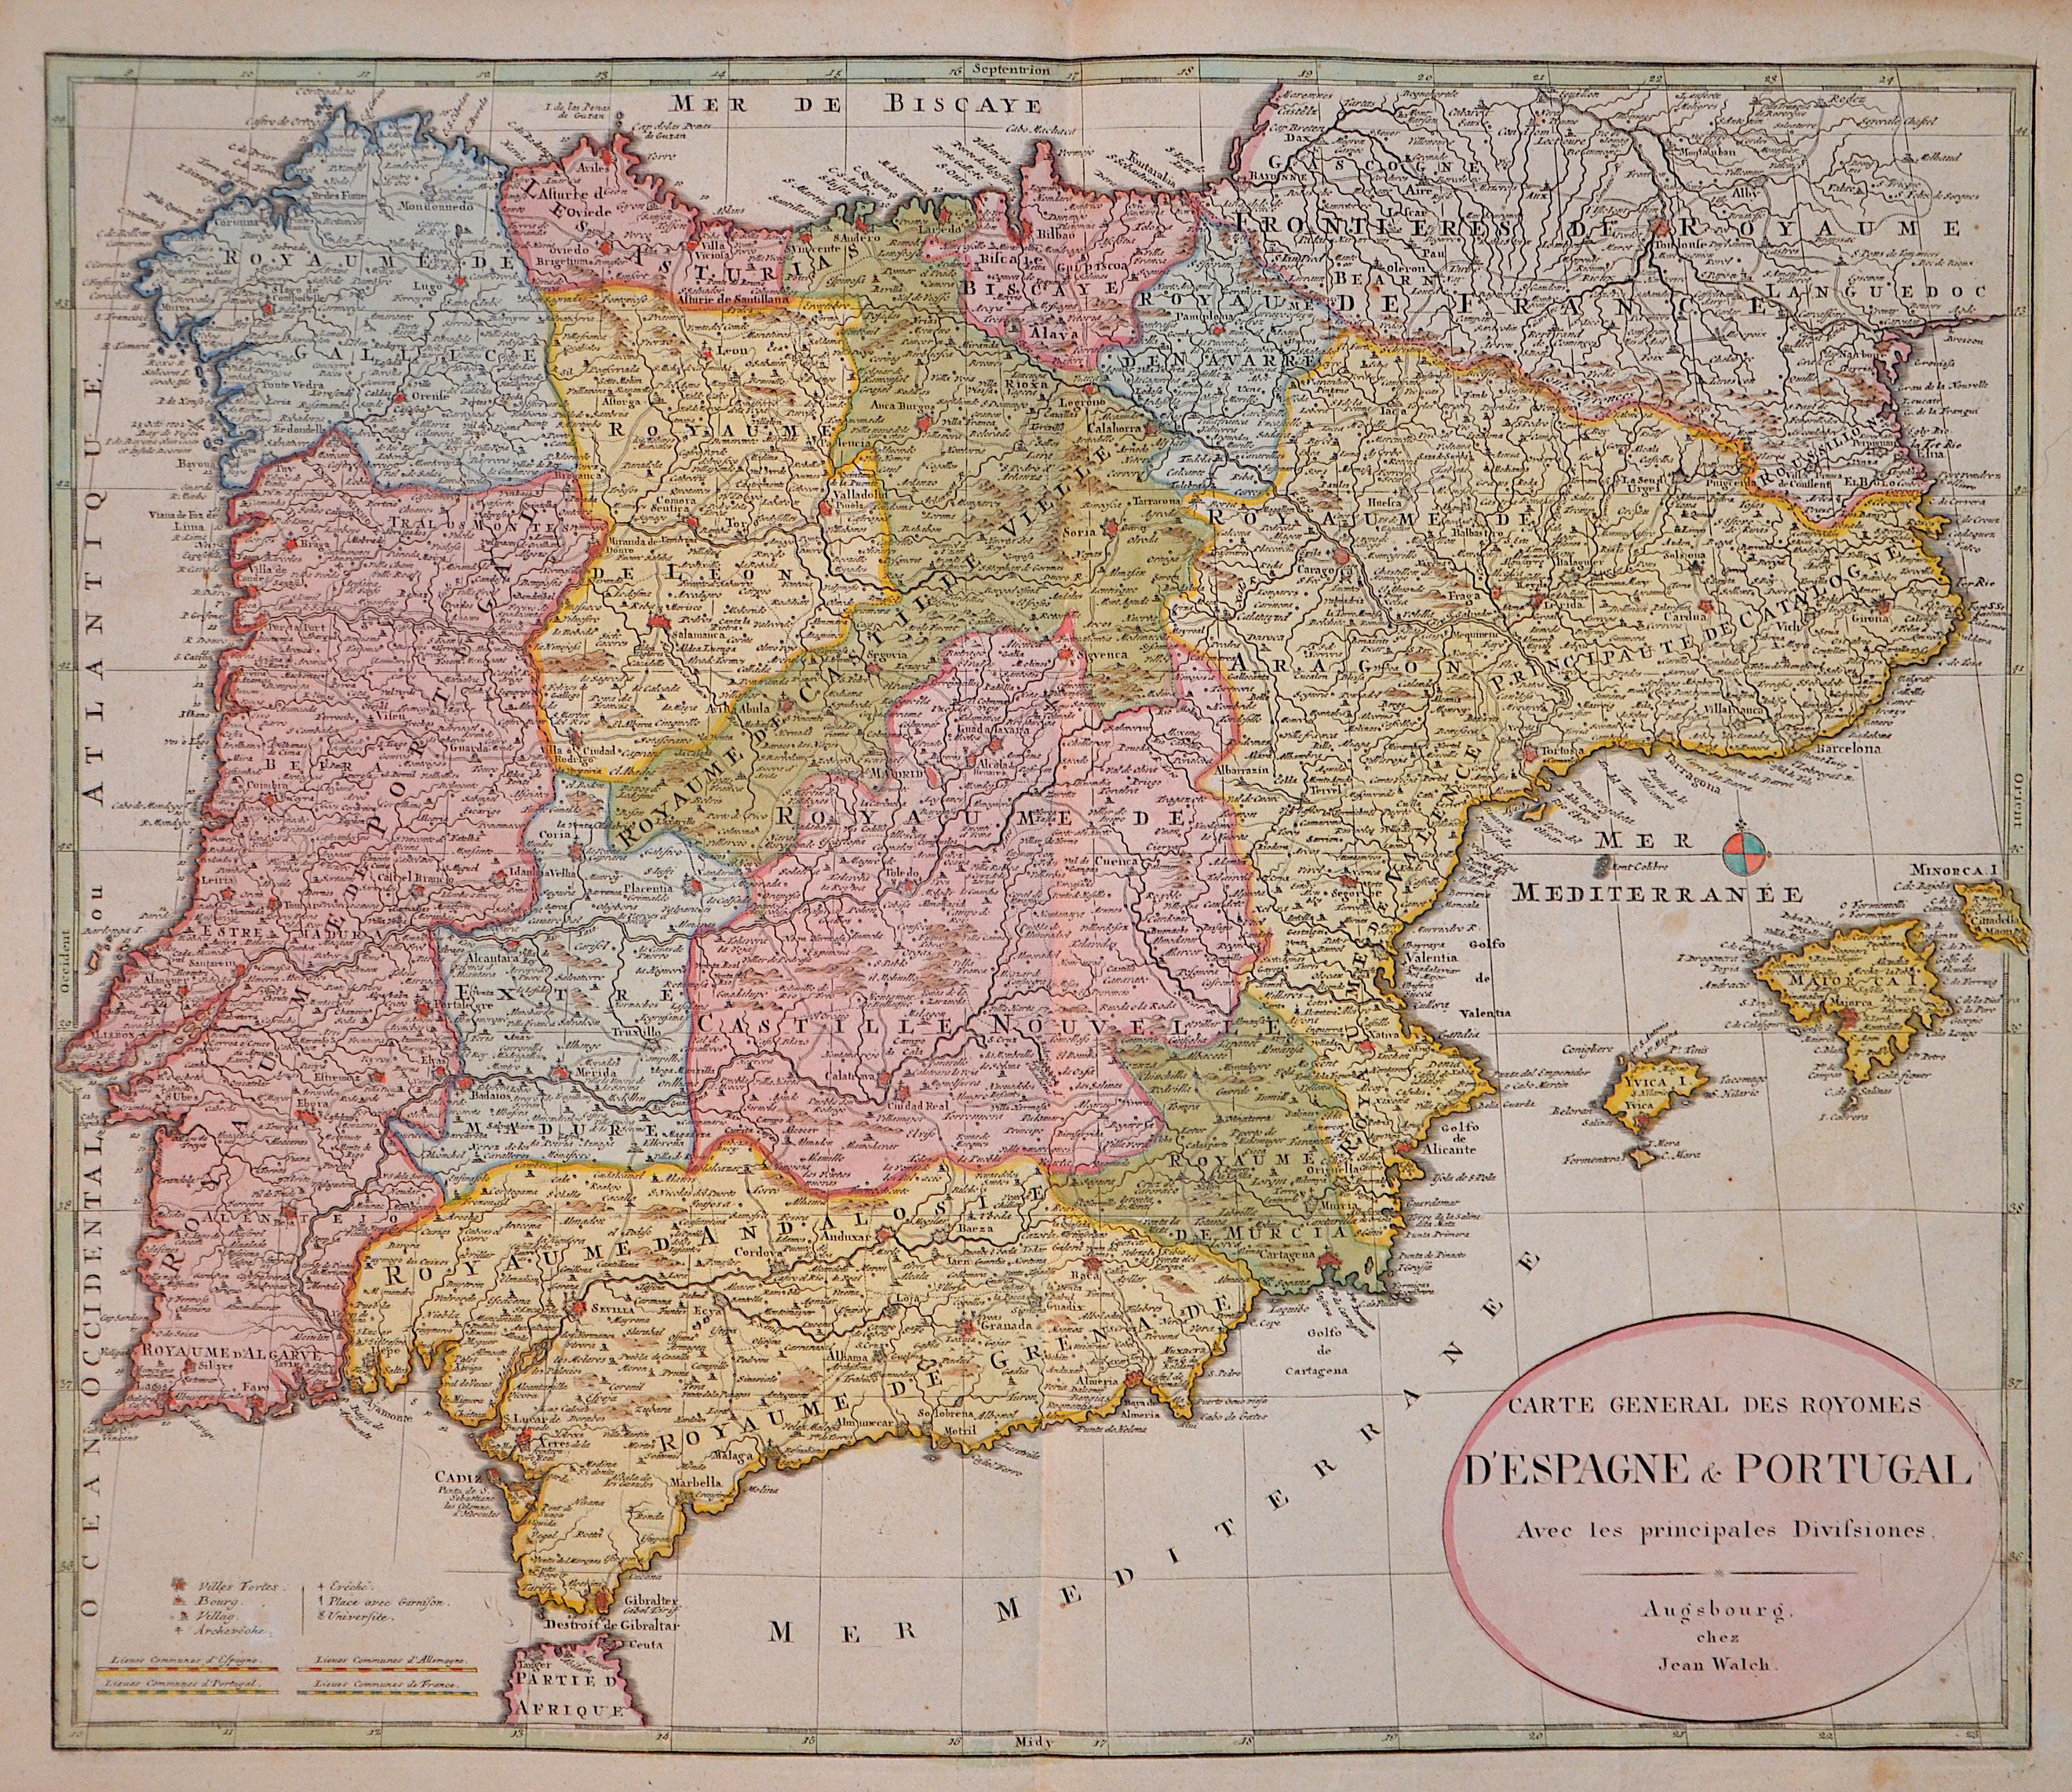 Walch  Carte General des Royomes d’Espagne & Portugal.  Avec les principales Divisiones.